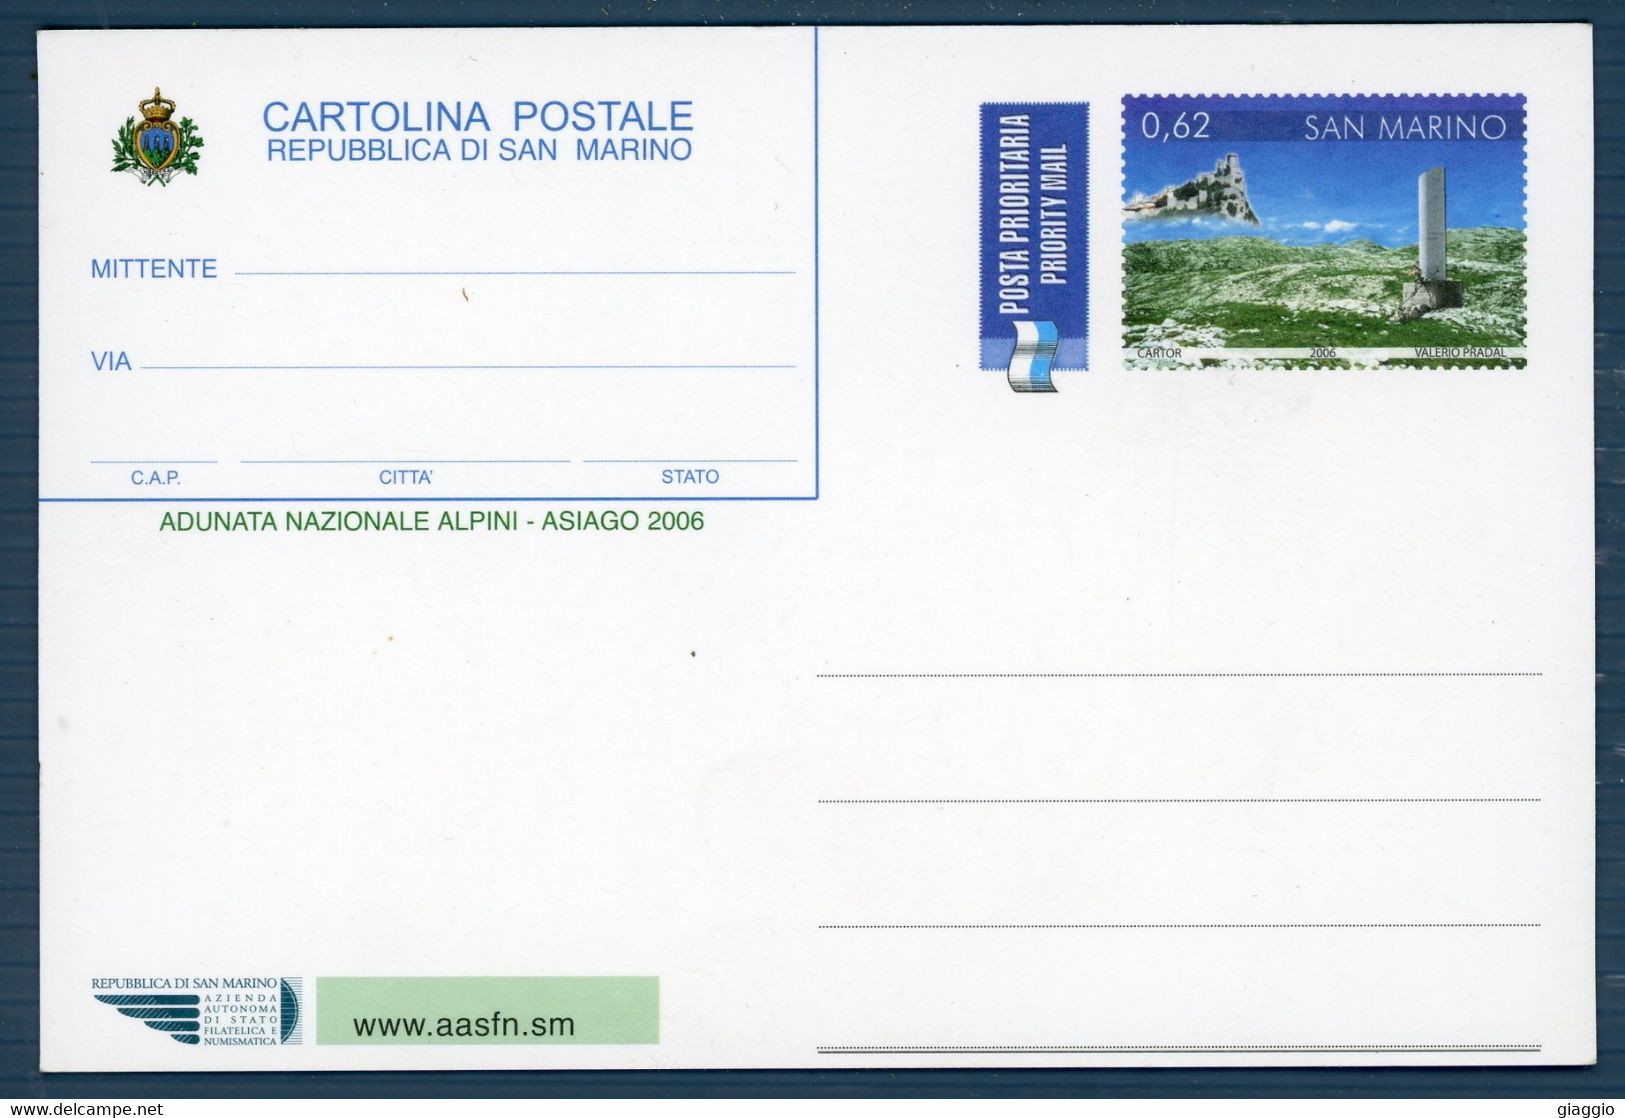 °°° Francobolli N. 1523 - San Marino Cartolina Postale Adunata Nazionale Alpini Fuori Formato °°° - Interi Postali